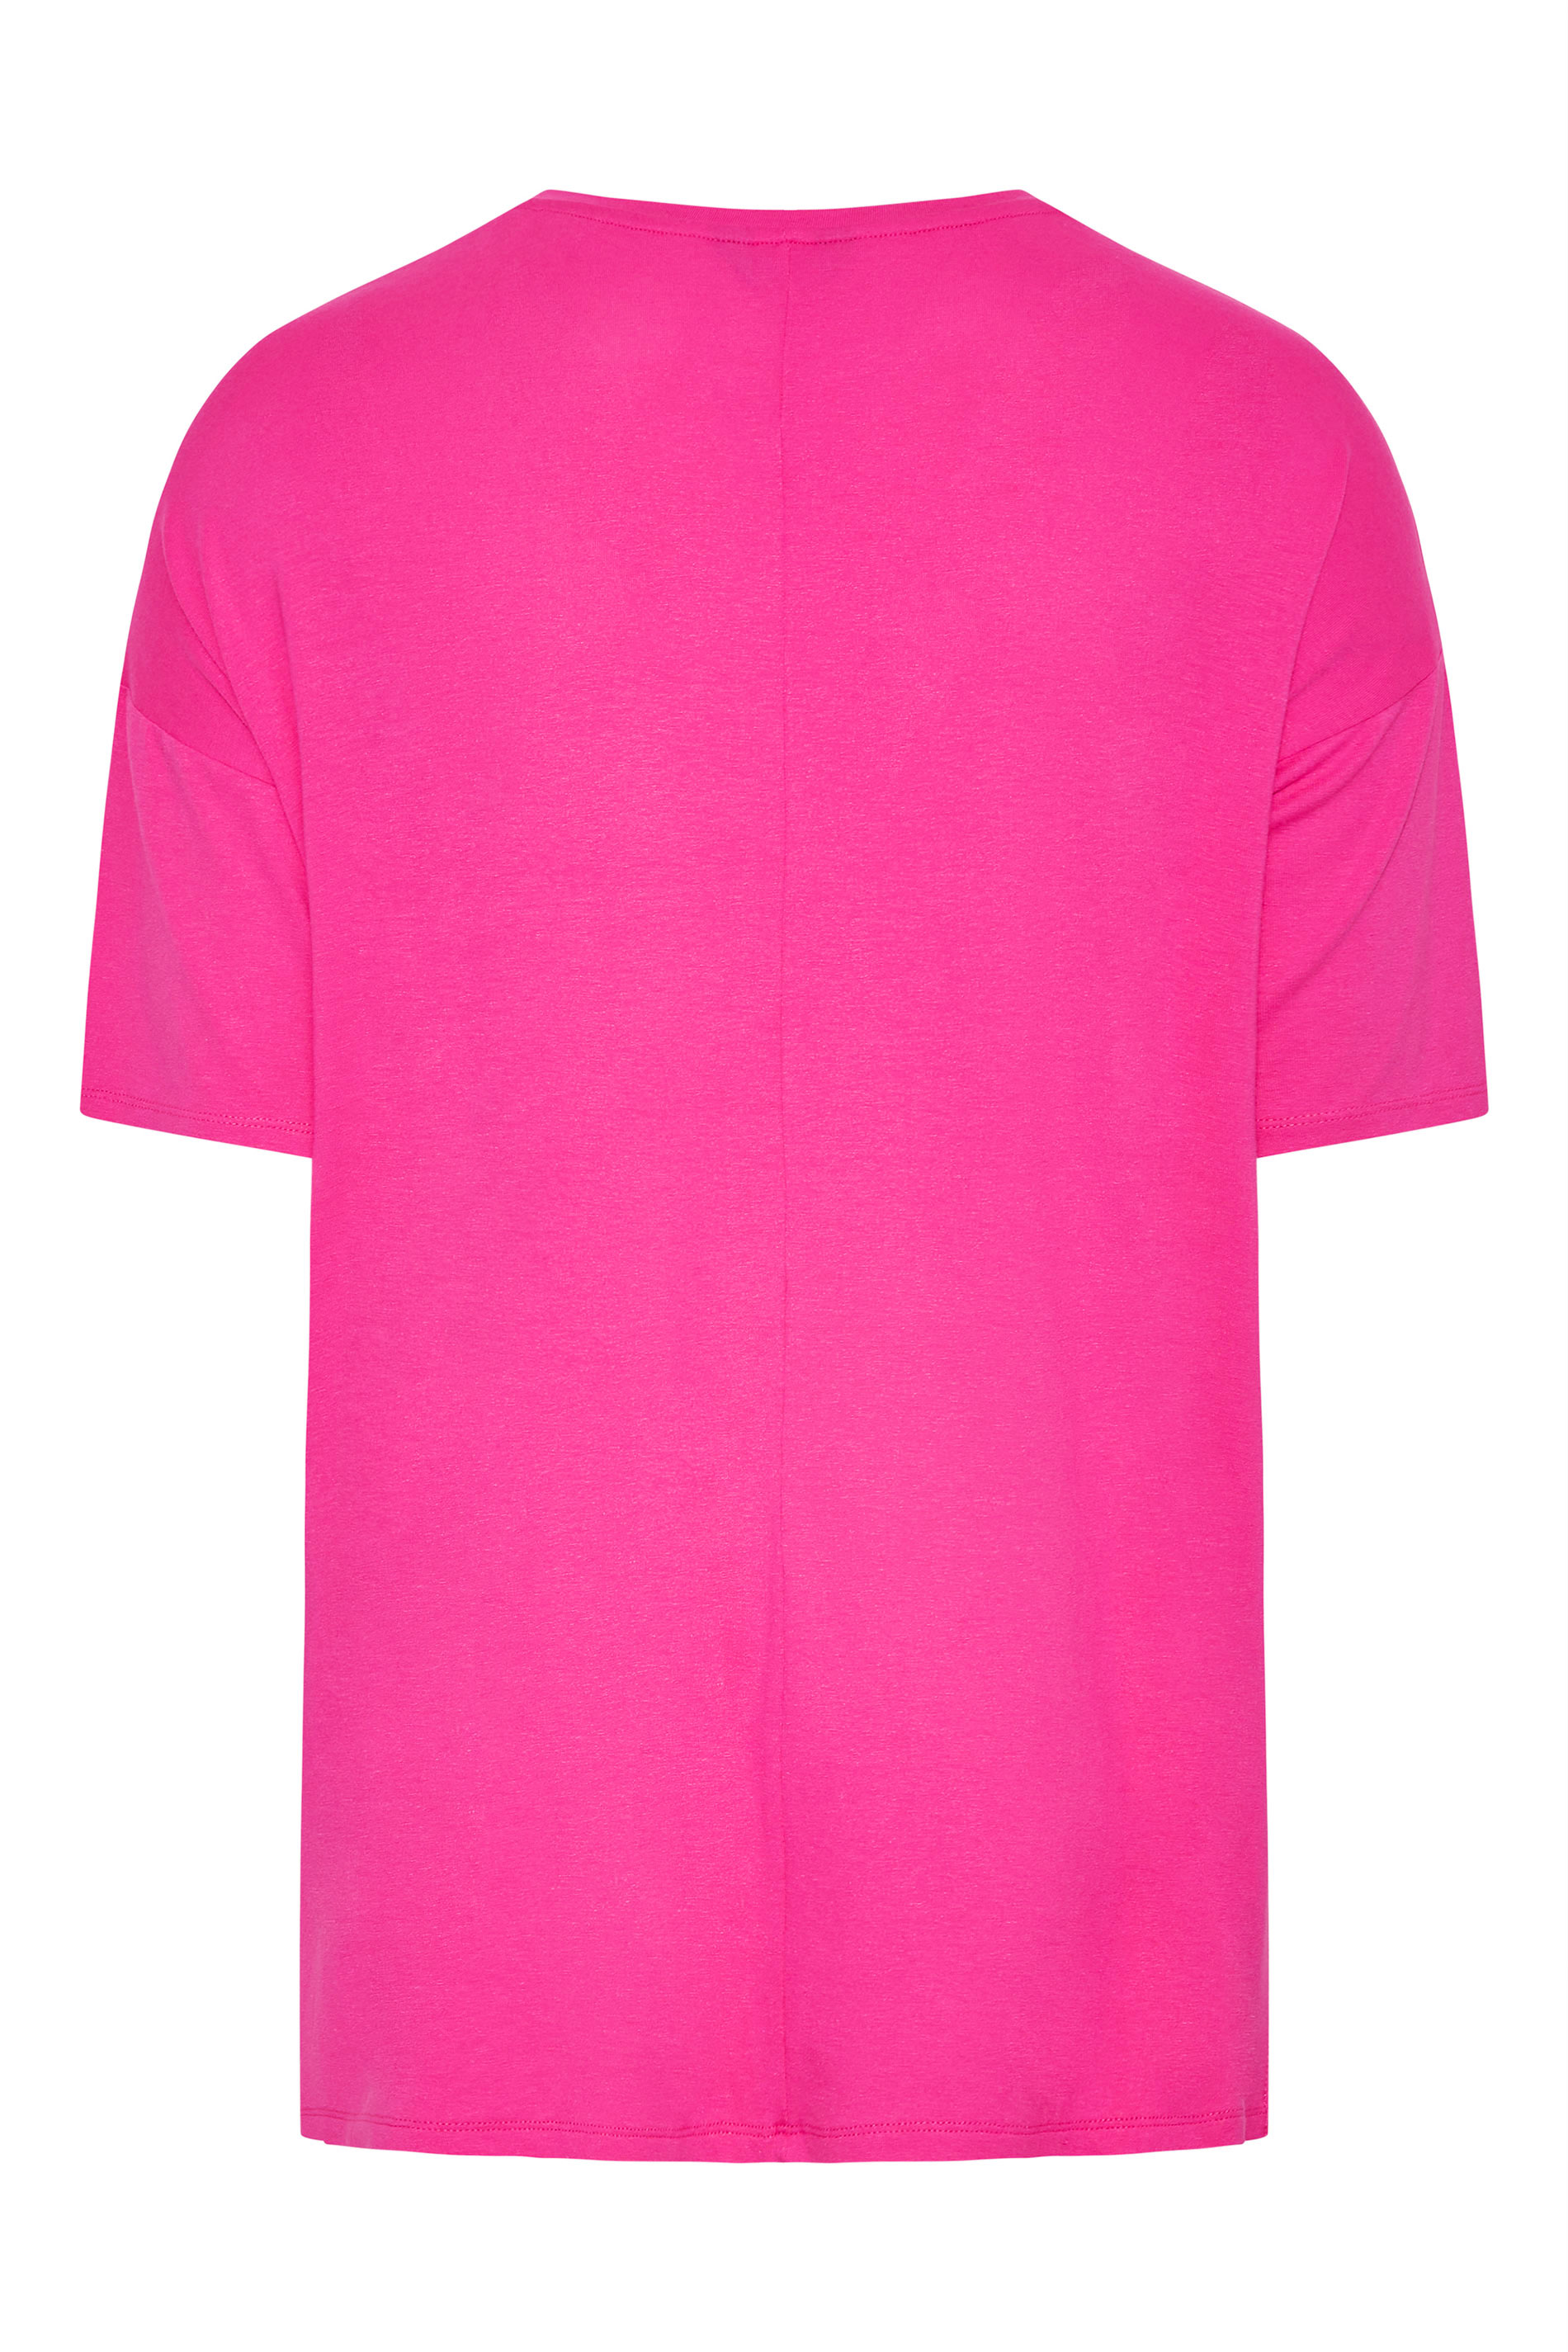 Grande taille  Tops Grande taille  Tops Casual | T-Shirt Rose Design Oversize en Jersey - UU02783